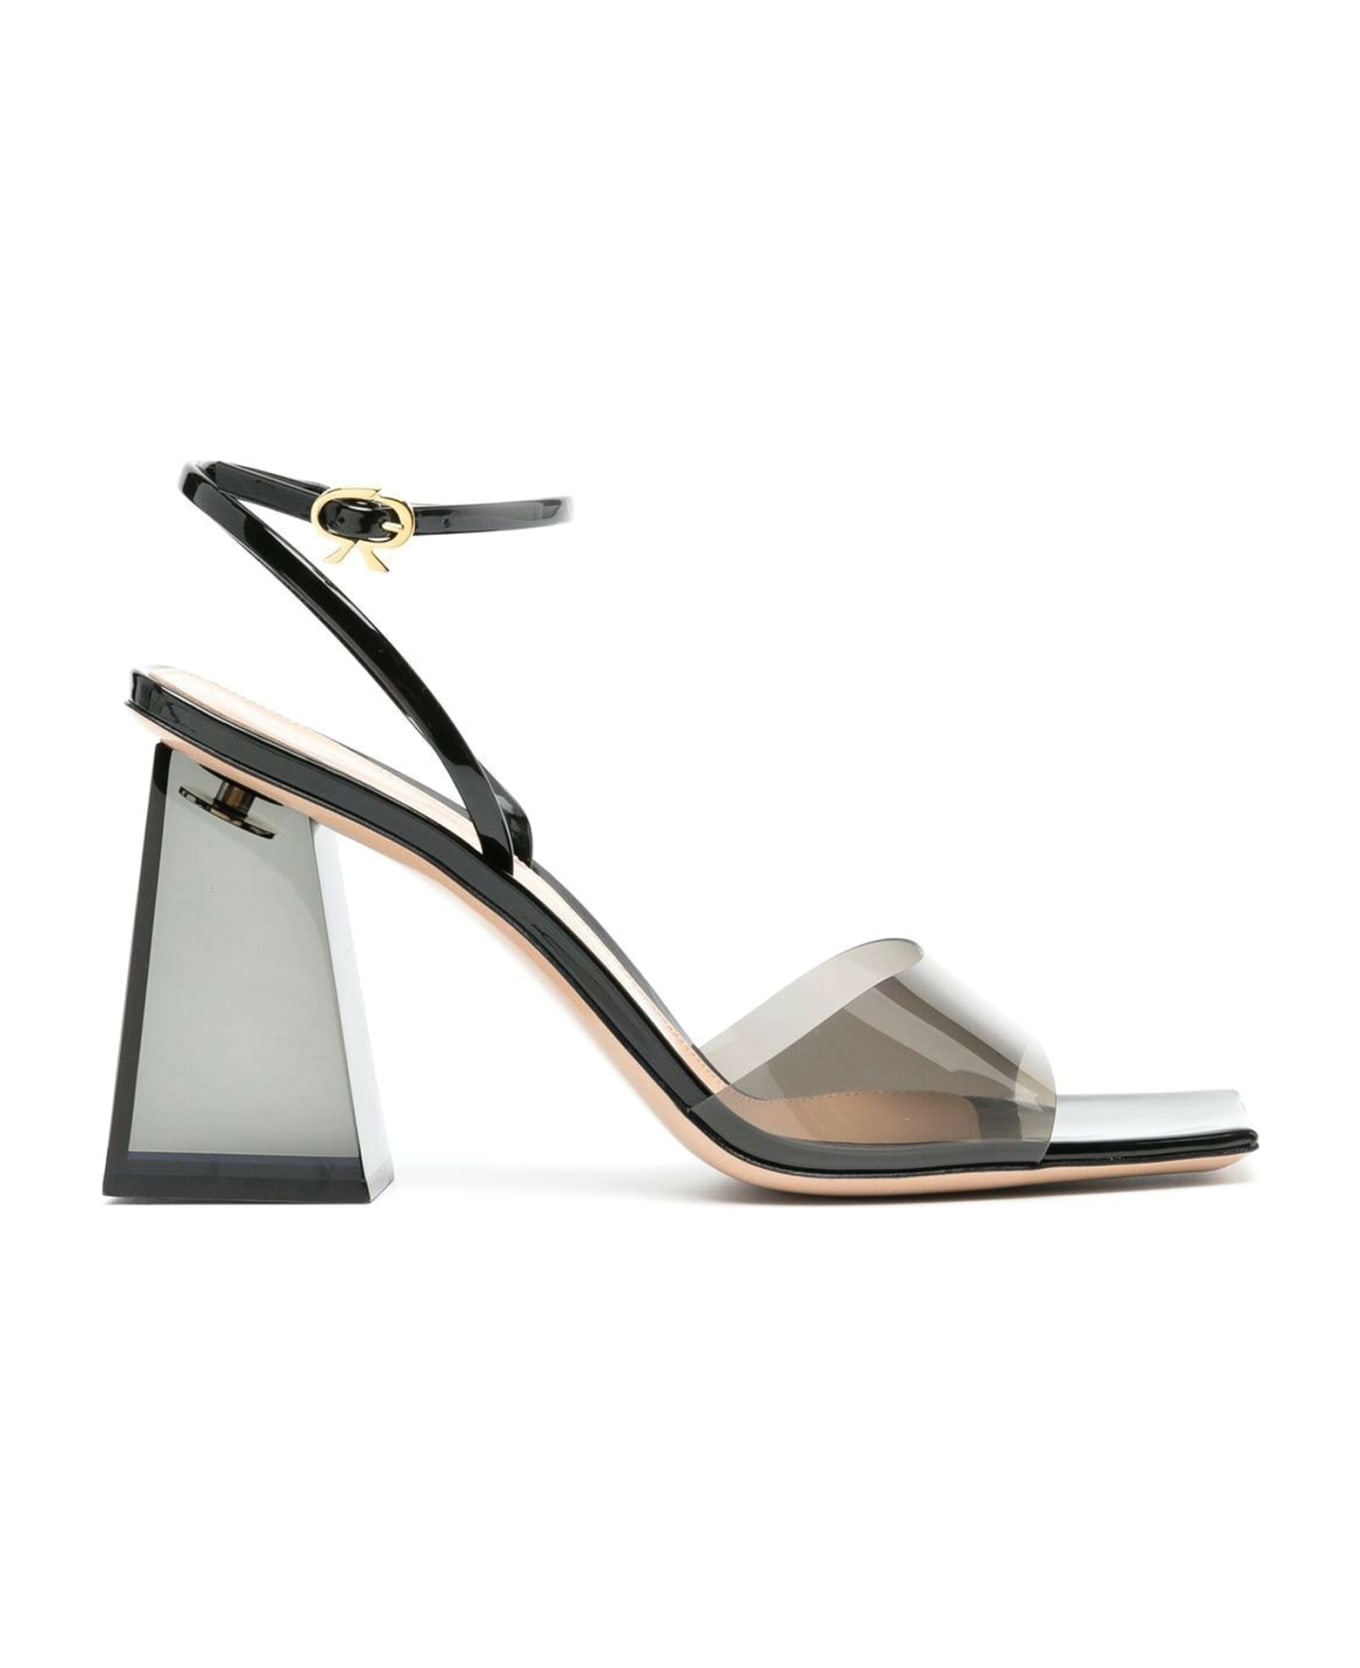 Gianvito Rossi Cosmic Sandal 85 Glass+vernice - Essential summer sandals